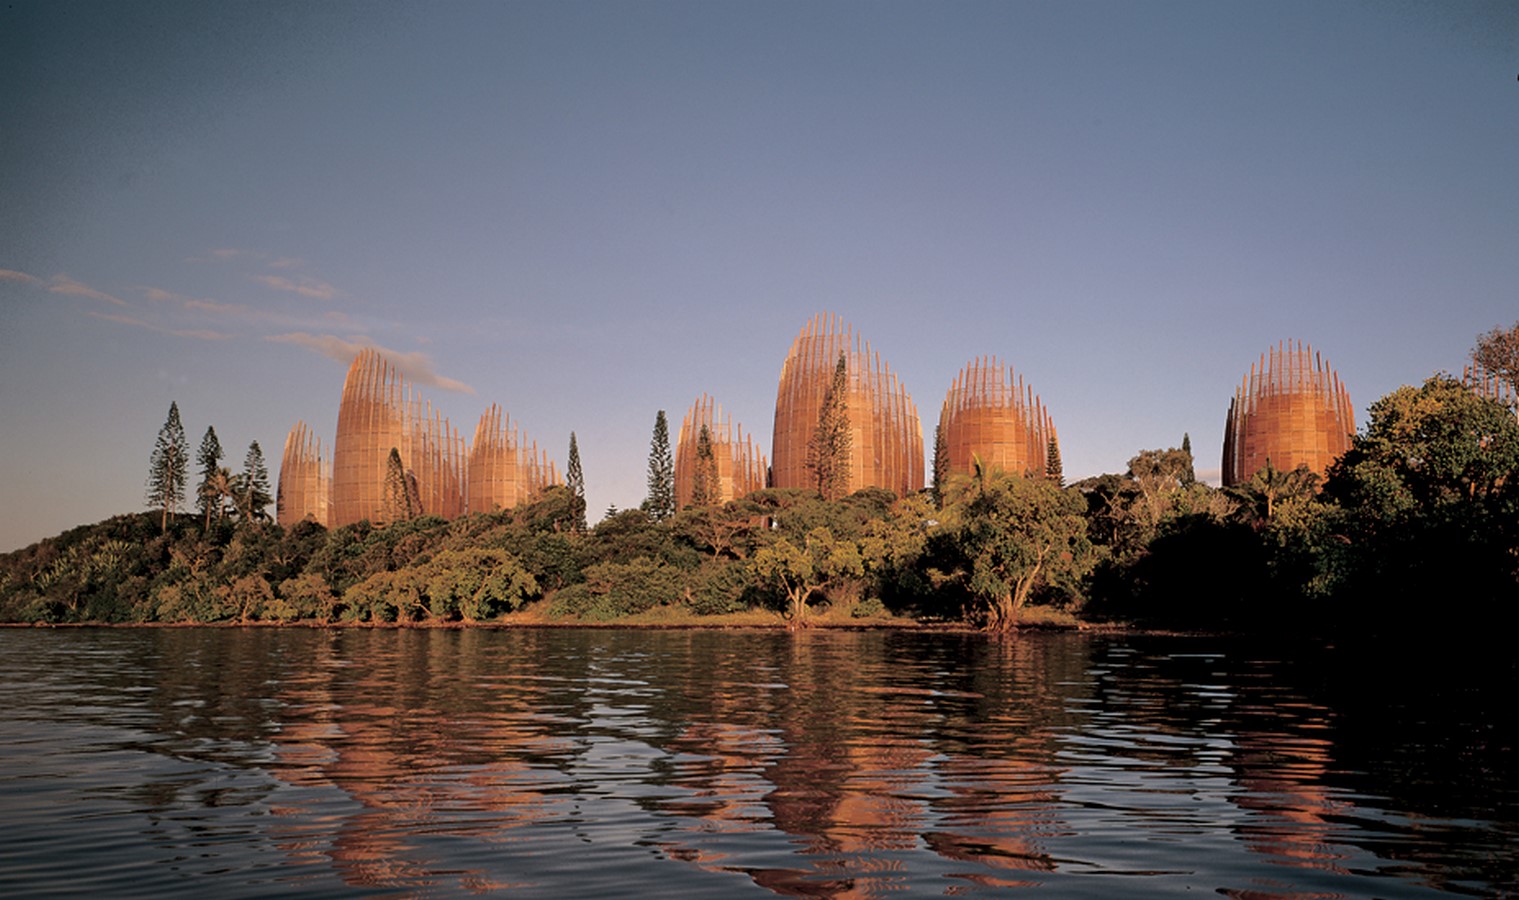 Jean-Marie Cultural Center by Renzo Piano: Symbolizing the Kanak civilization - sheet 4